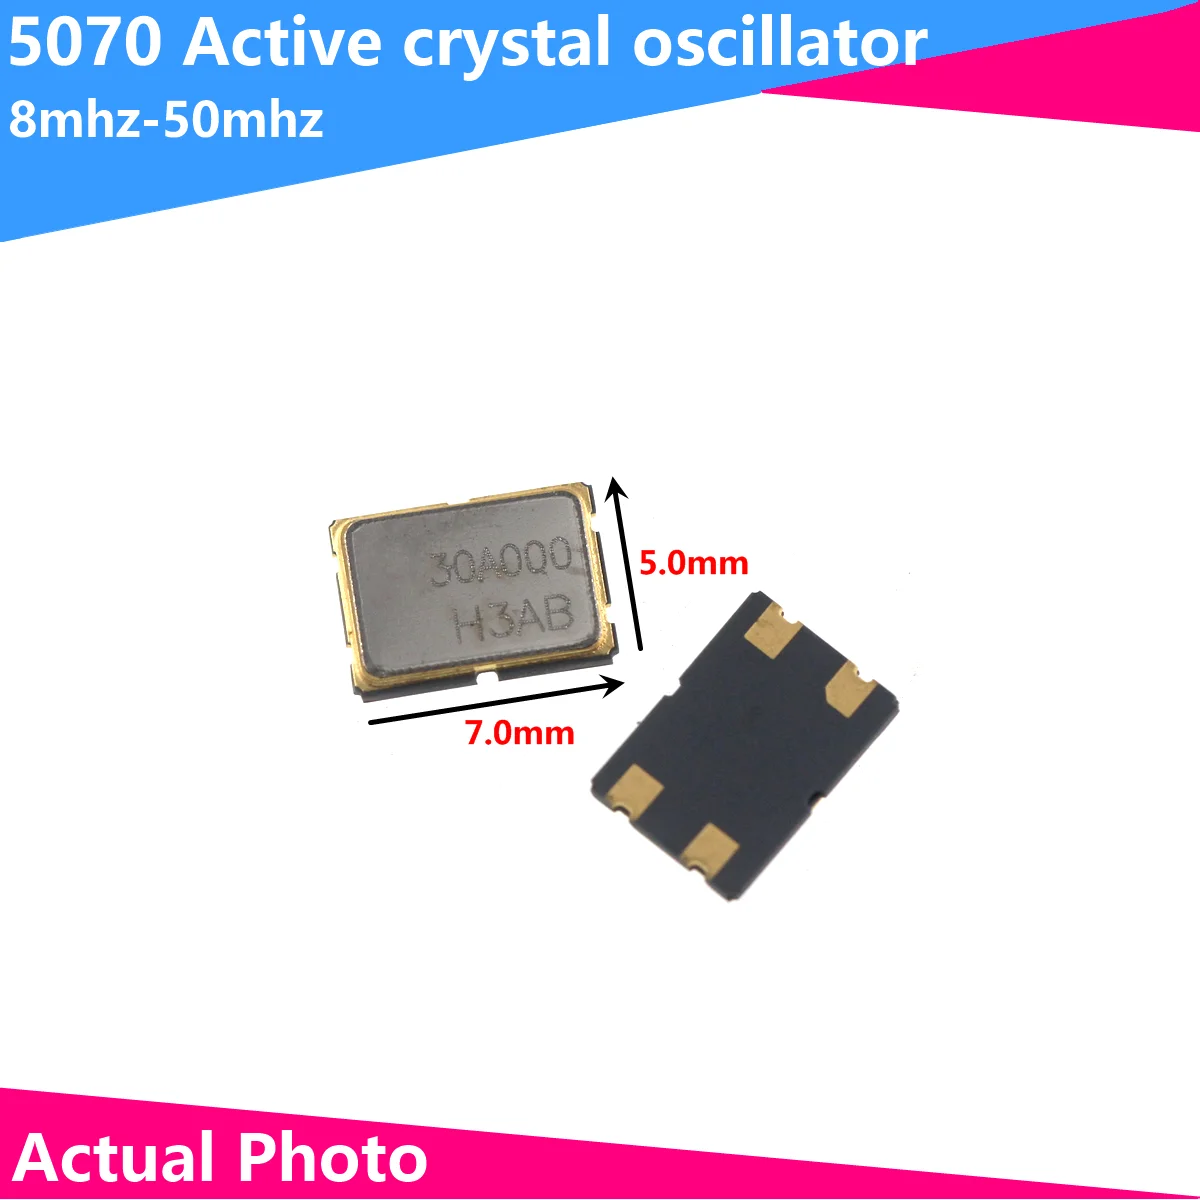 

2PCS Active crystal oscillator 4PIN SMD 7050 5070 4M 6M 8M 10M 12M 16M 20M 24M 25M 27M 30M 32M 40M 48M 50M 54M 100M 3.579545M 4.